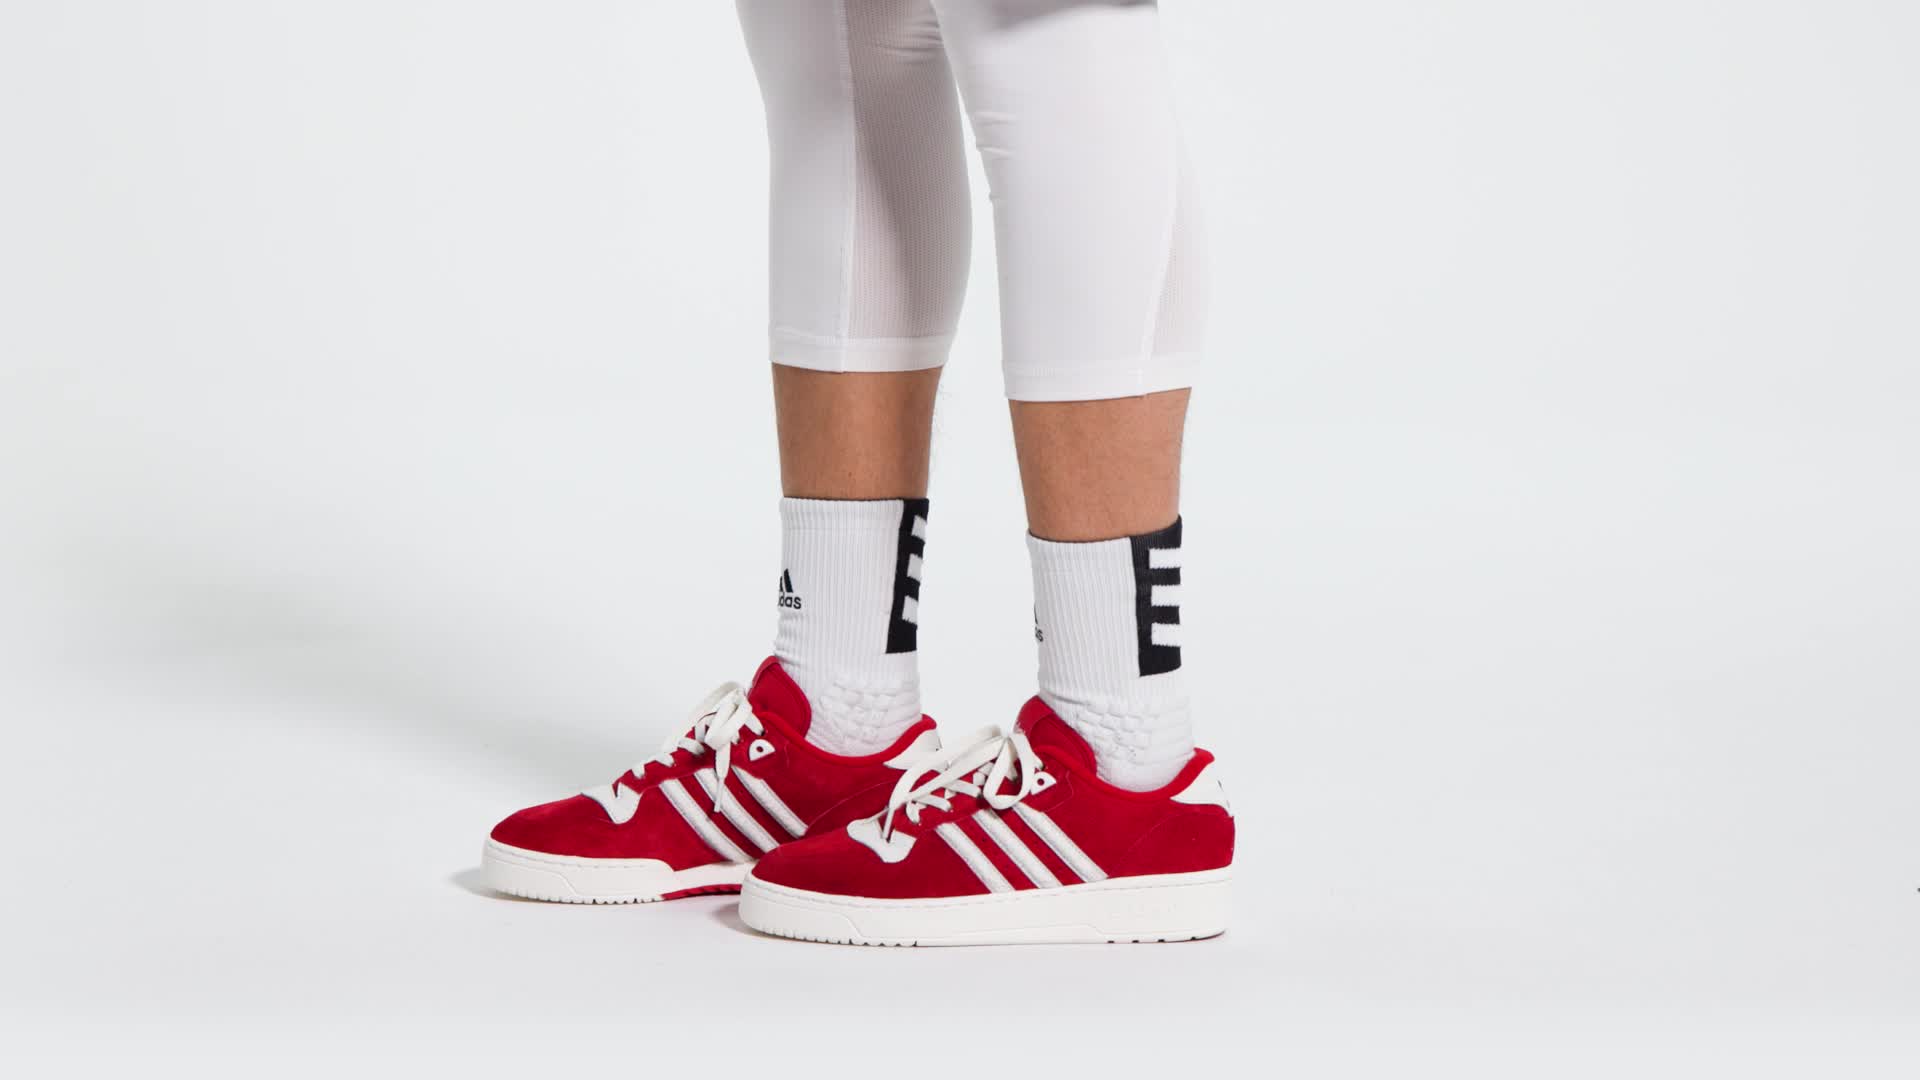 Nebraska Cornhuskers Adidas Basketball Shoe Men's White/Red New 12.5 9